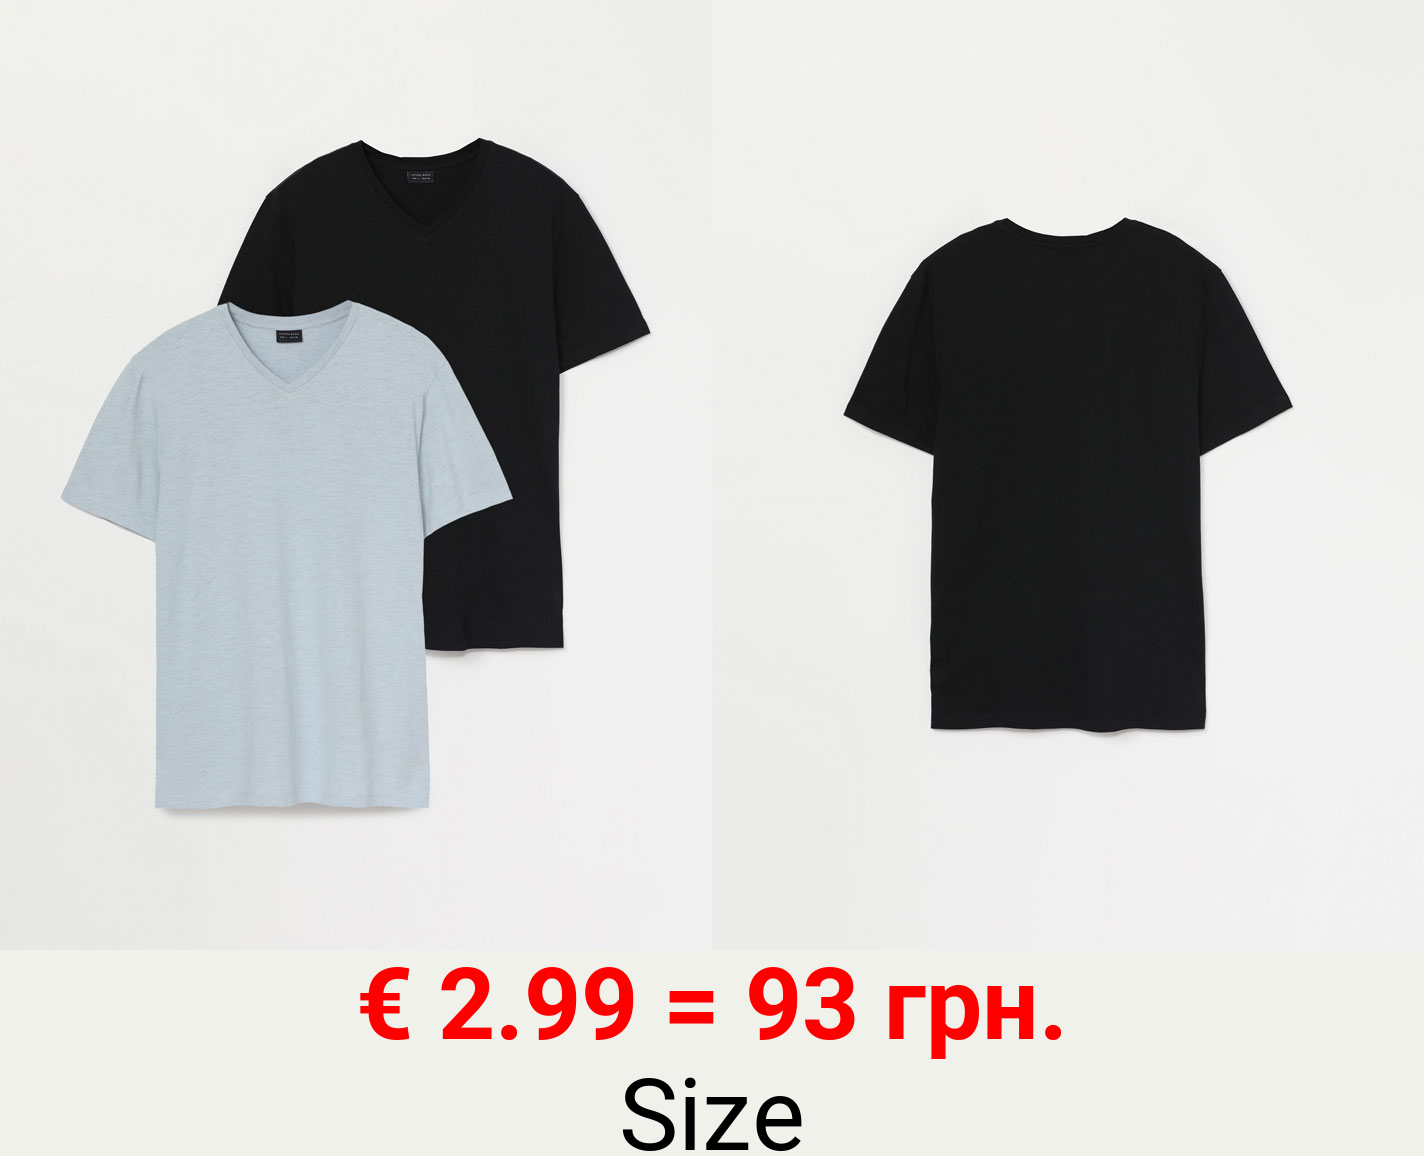 Pack of 2 basic V-neck T-shirts